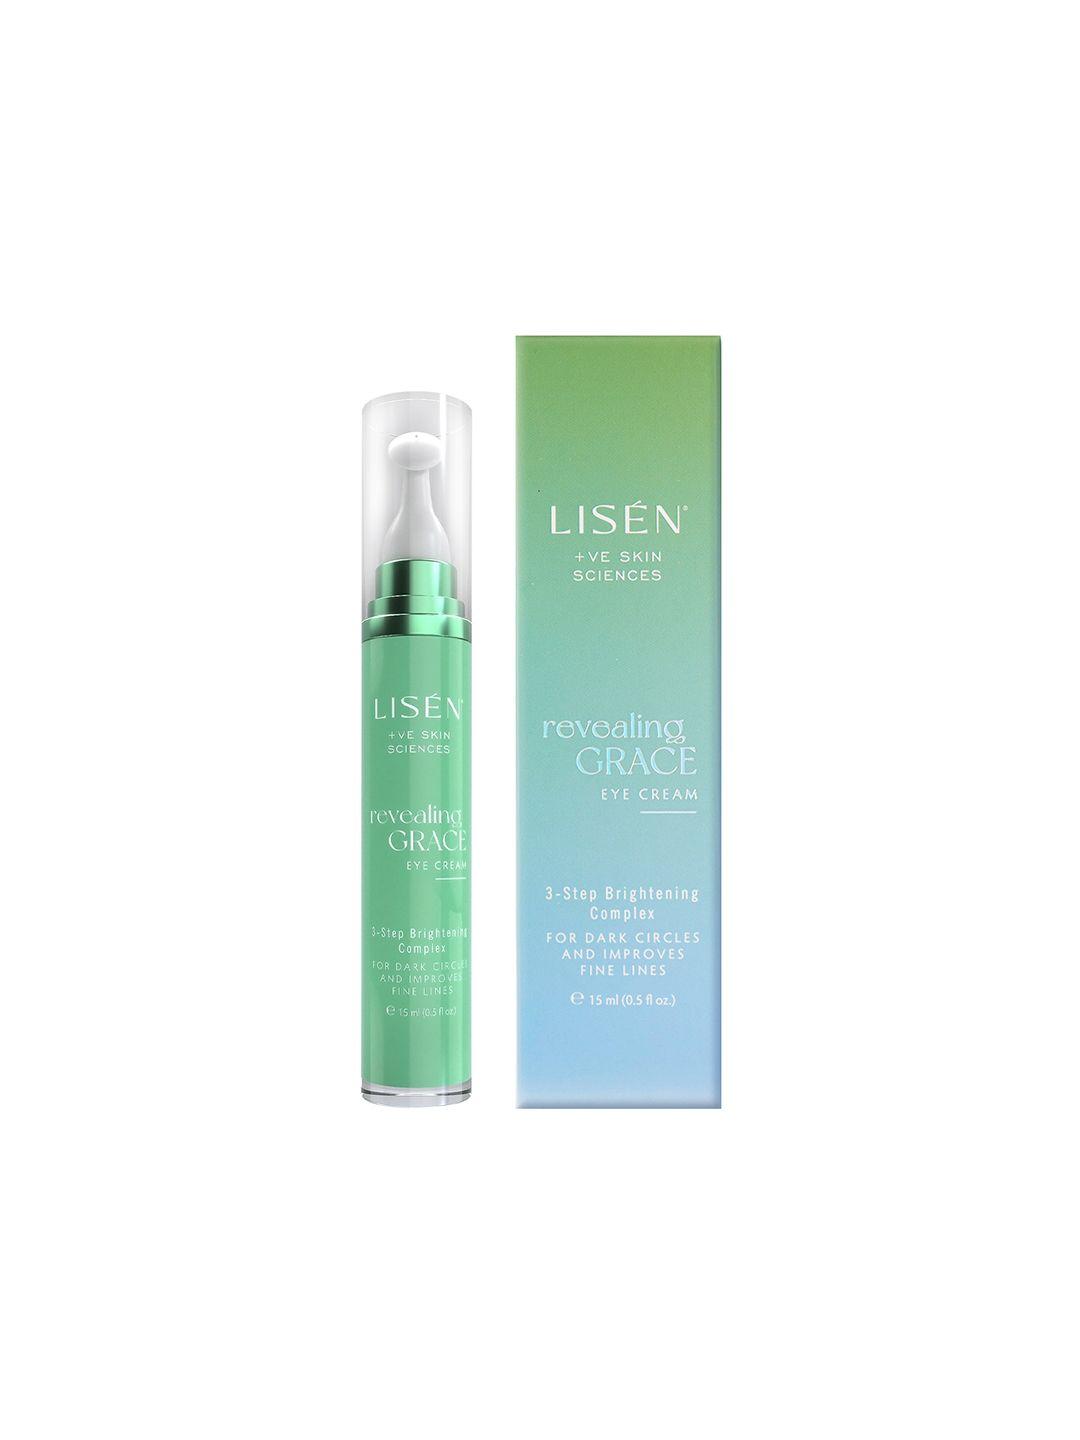 lisen revealing grace eye cream to reduce dark circles puffiness fine lines & wrinkles15ml